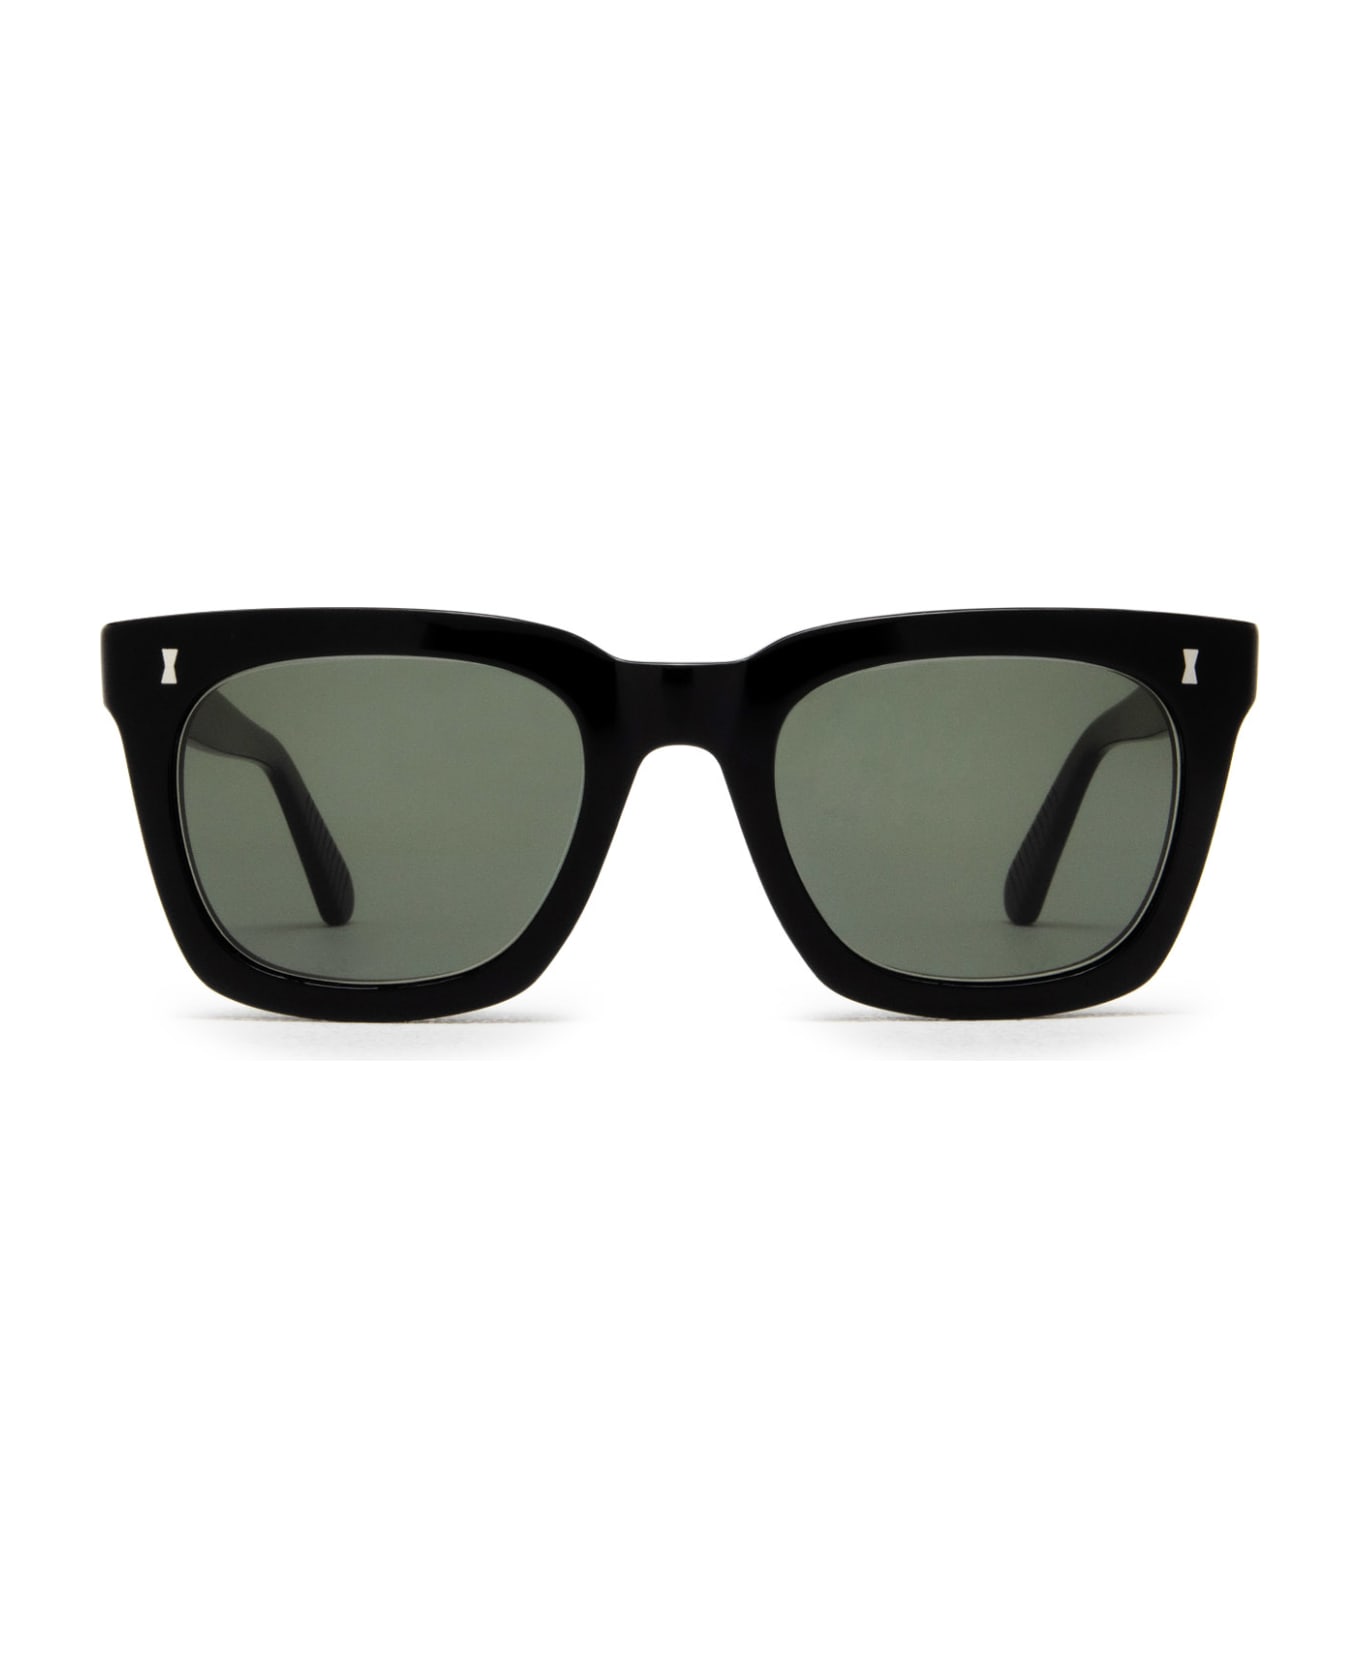 Cubitts Judd Sun Black Sunglasses - Black